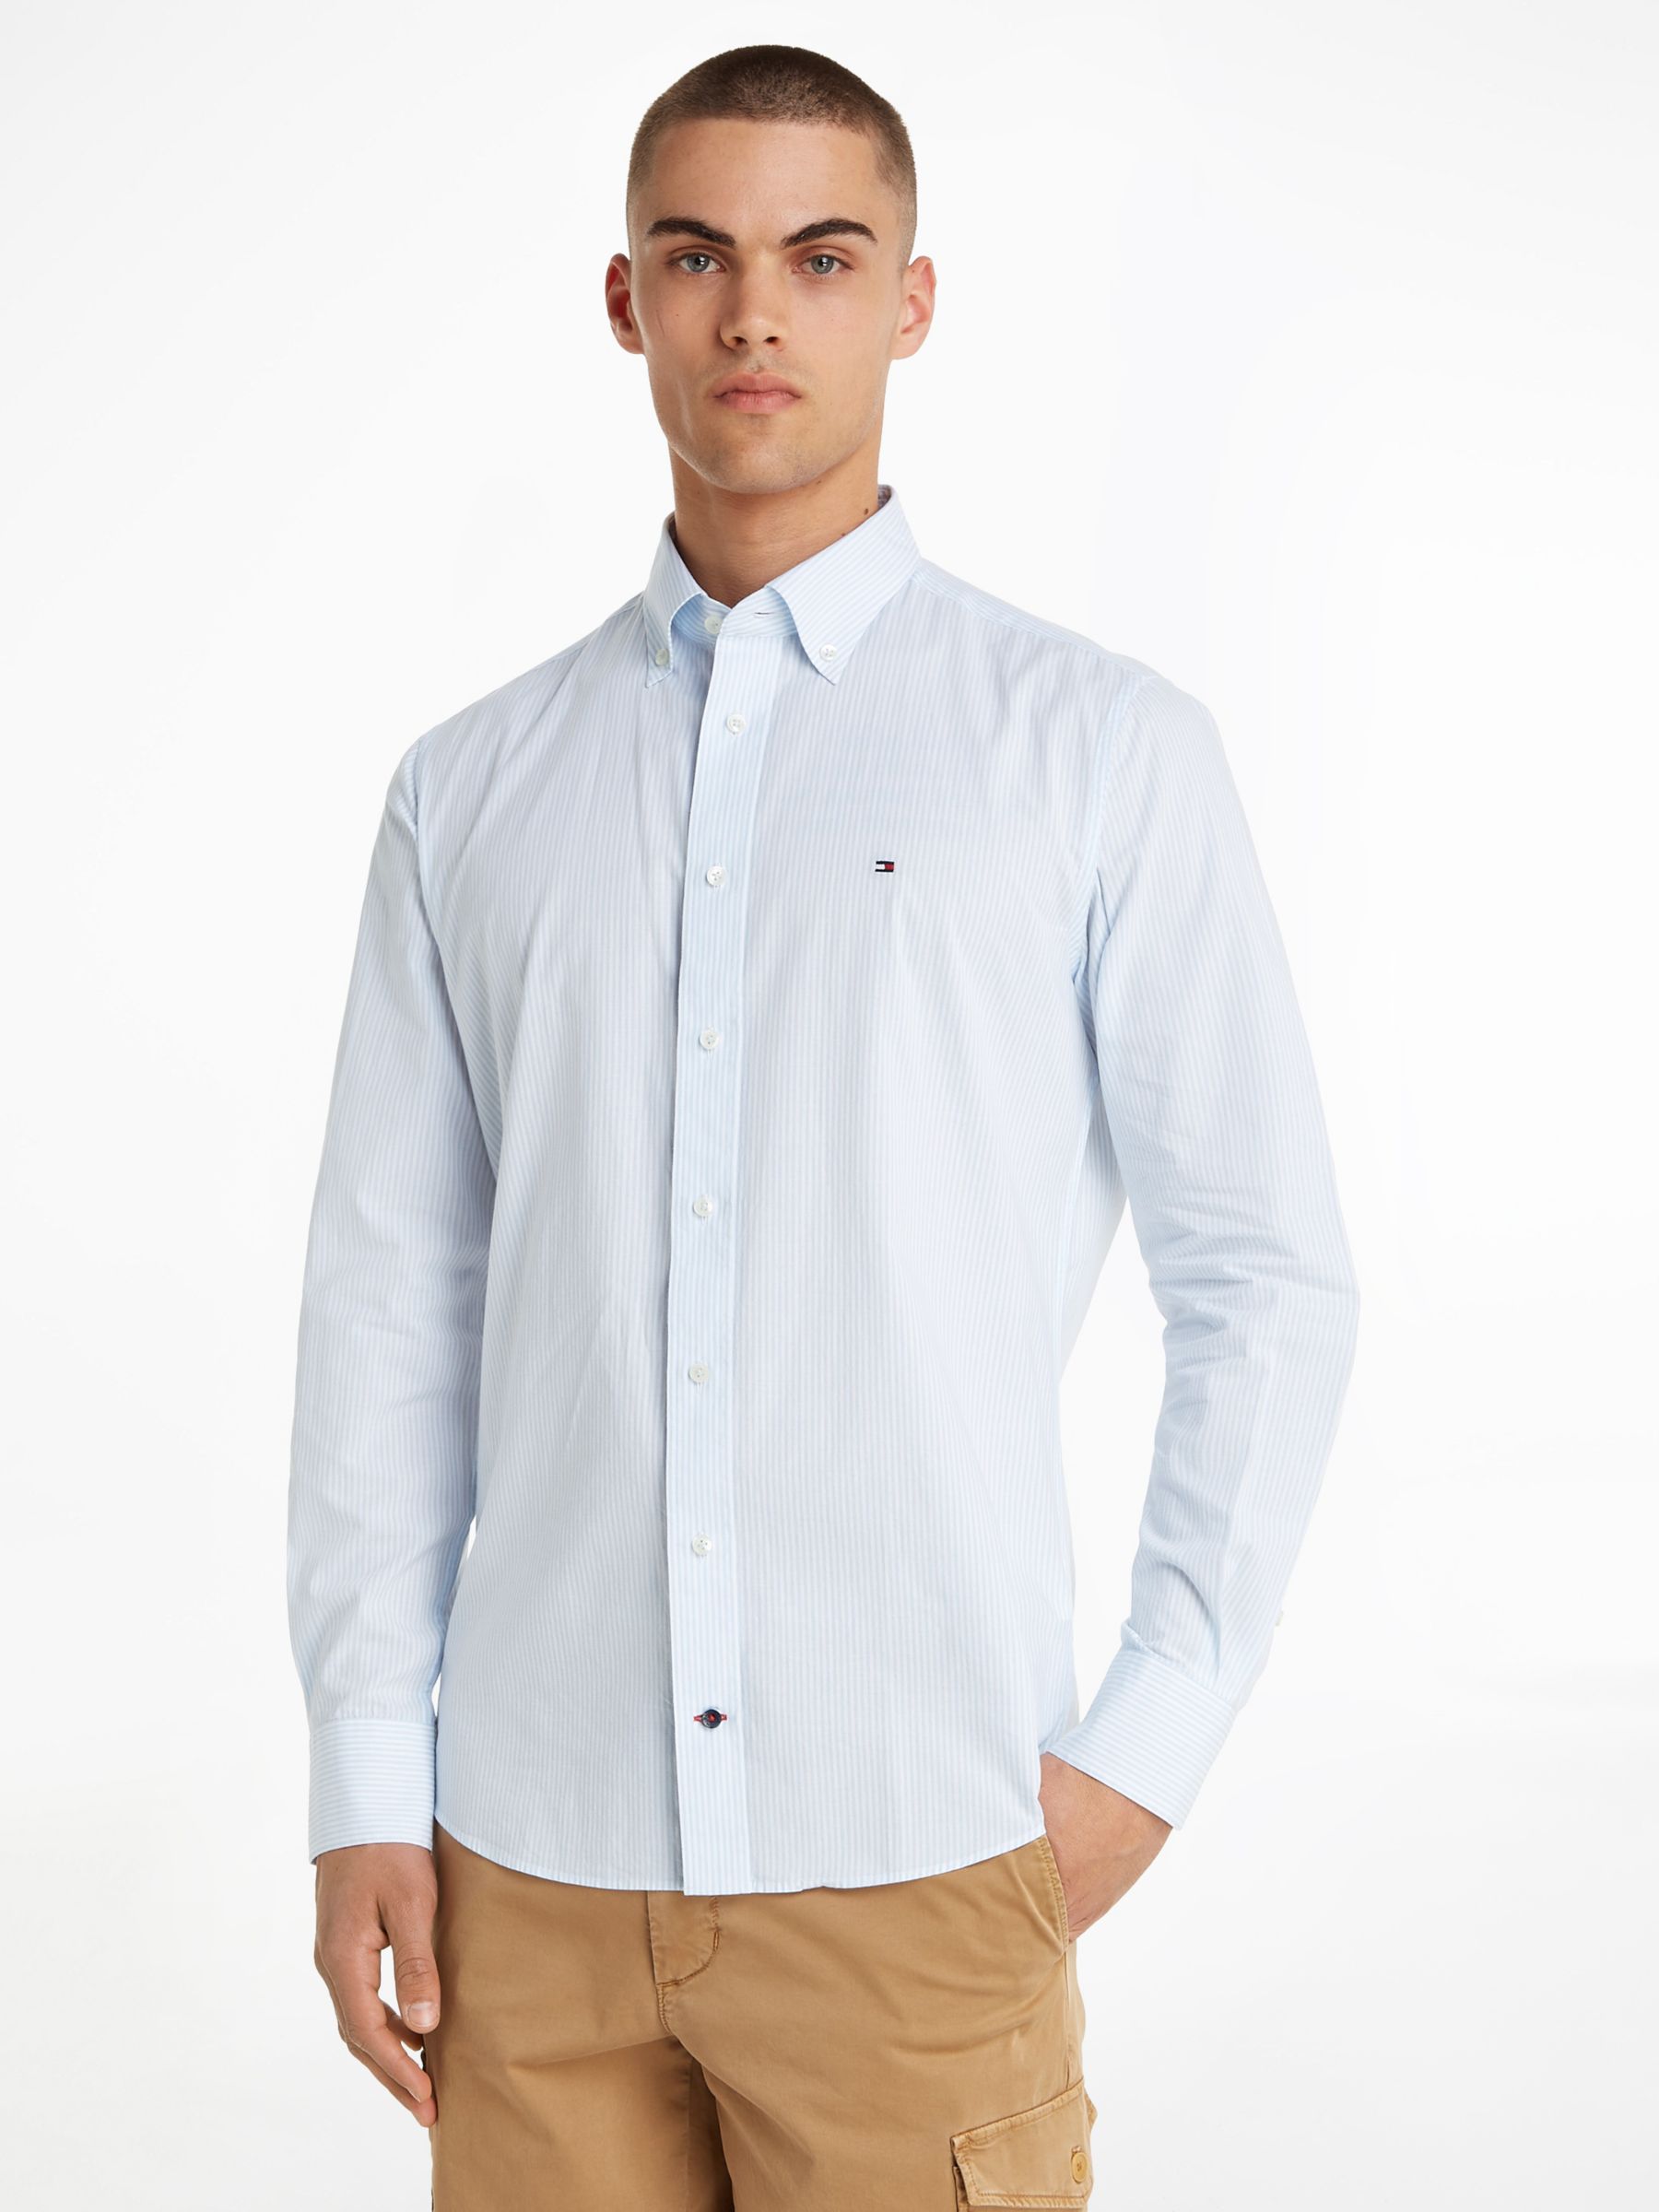 Tommy Hilfiger Essential Stripe Shirt, Blue/White John Lewis & Partners